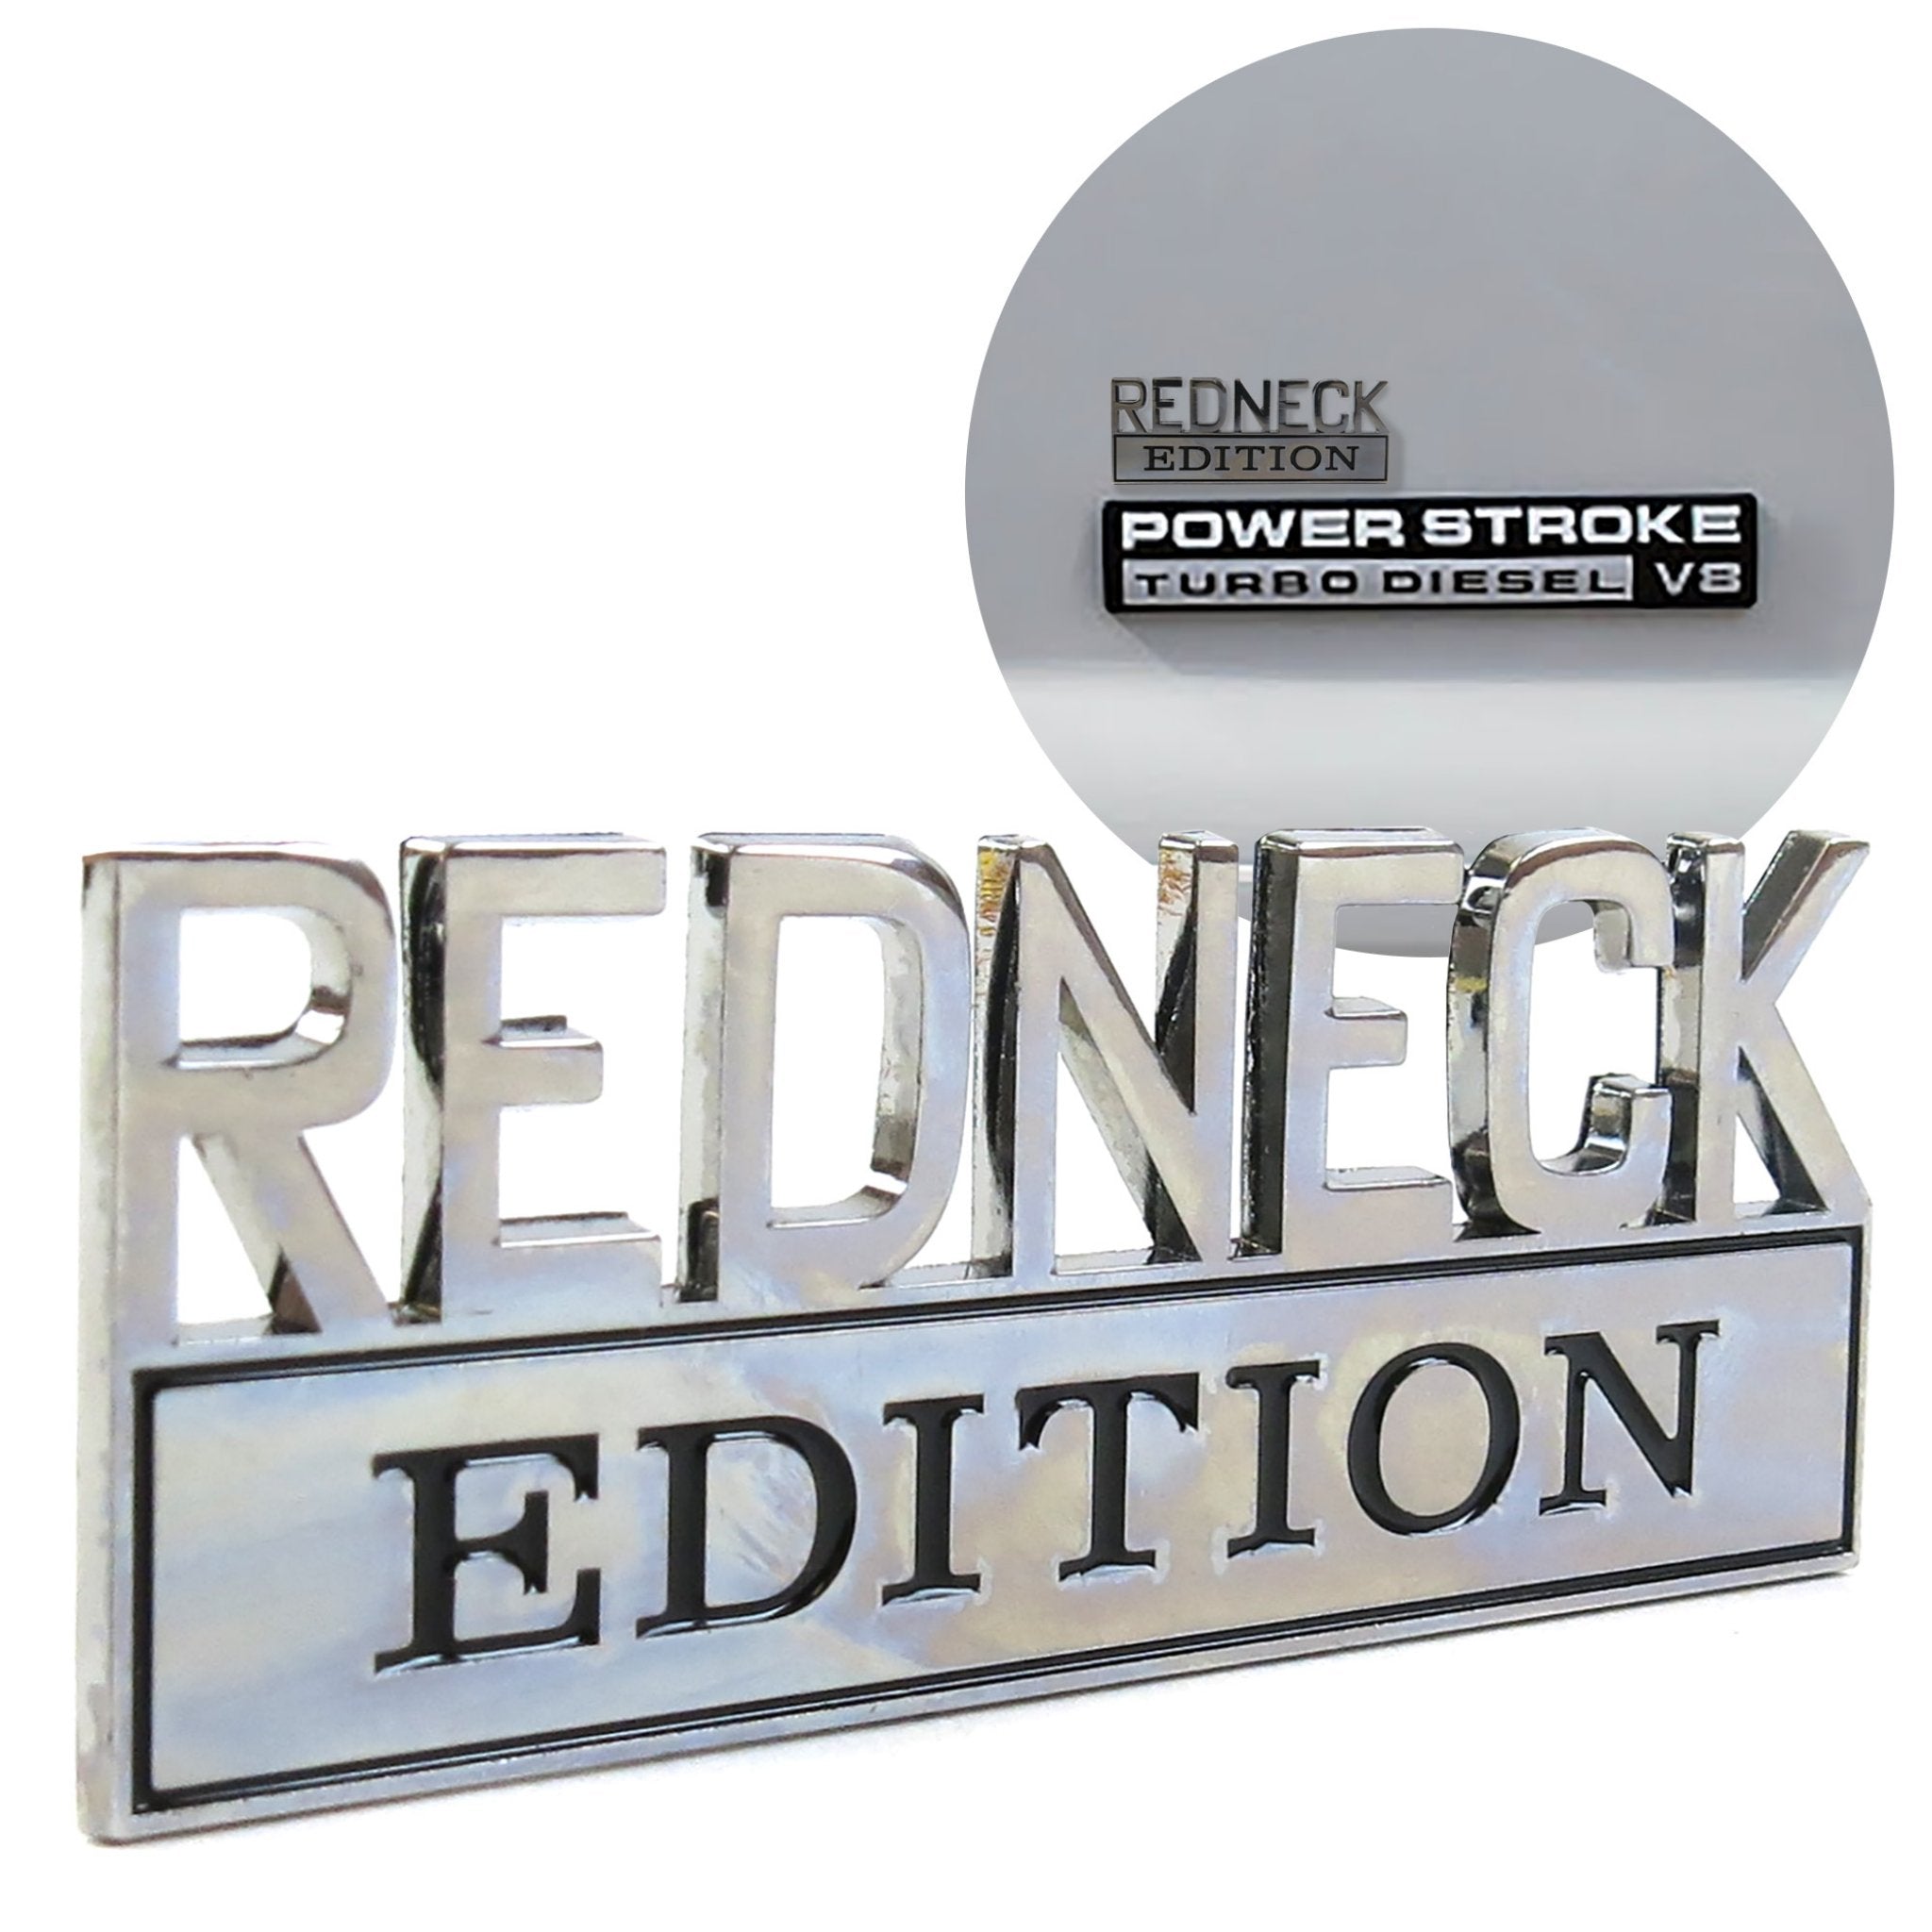 Chrome Metal Redneck Edition Fender Emblem Badge Car Truck Auto Tailgate Trunk